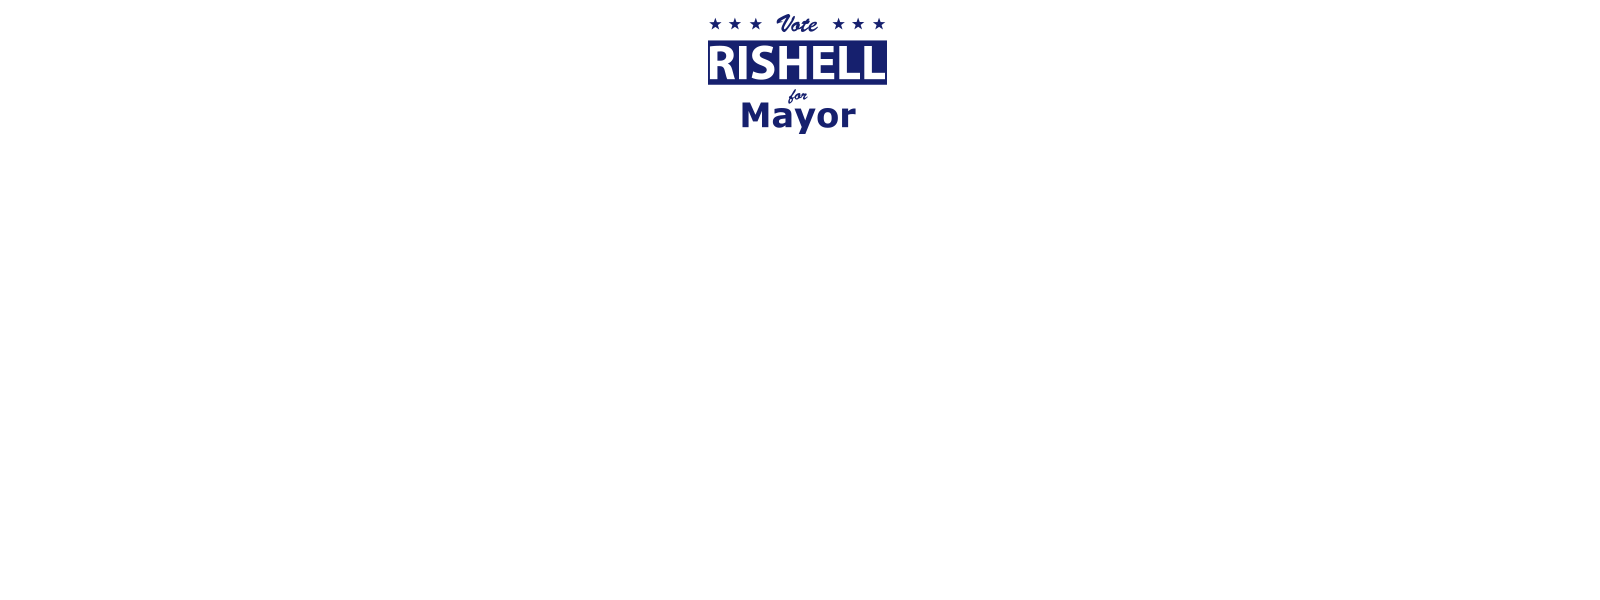 Testimonial from Rishell for Mayor